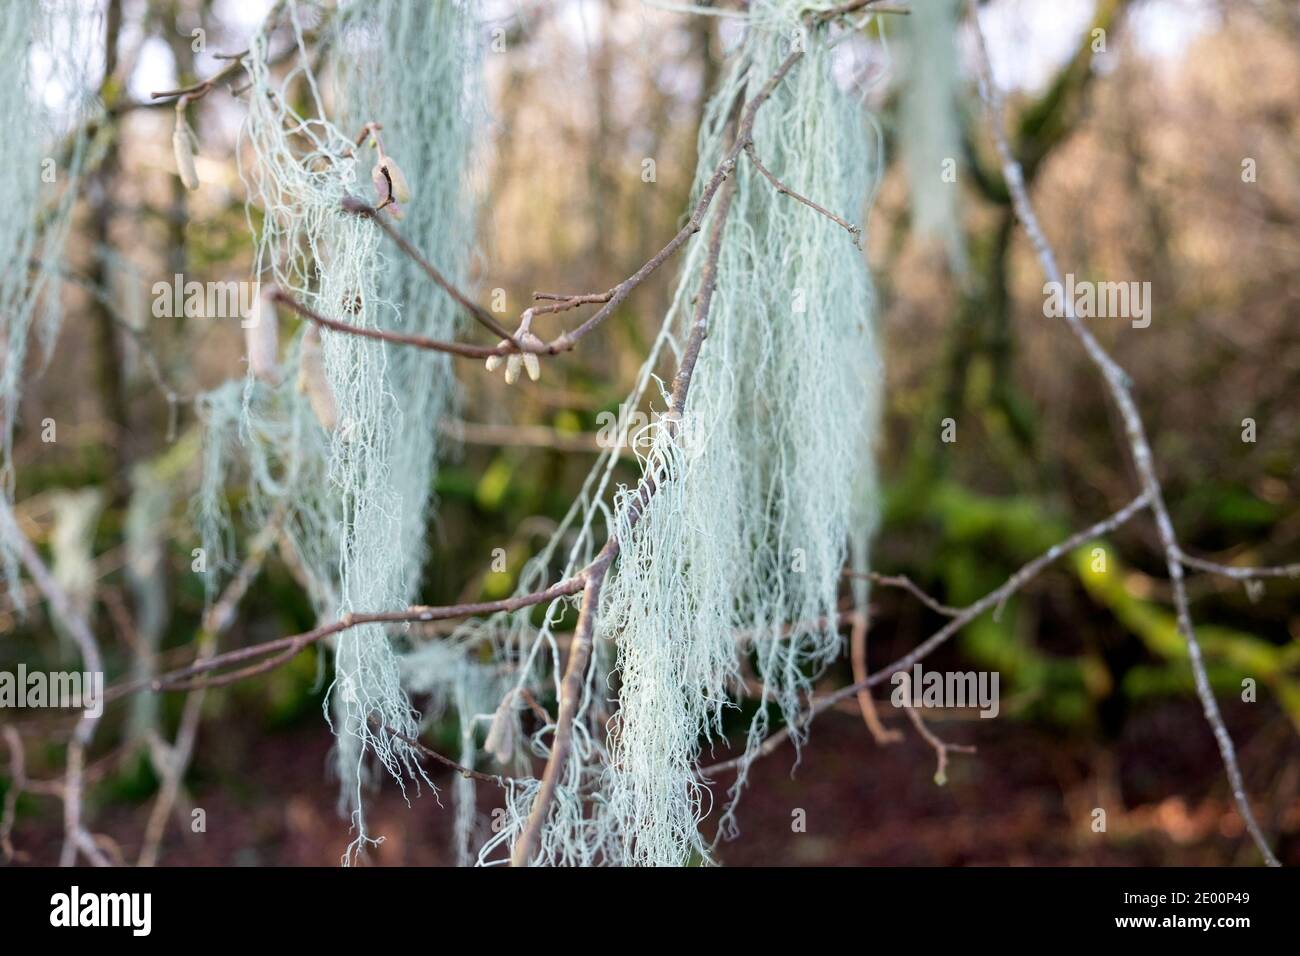 Usnea filipendula or dasopoga (dasypoga) beard lichen growing on branches of a tree in boggy area of woodland in winter Wales UK 2020 KATHY DEWITT Stock Photo